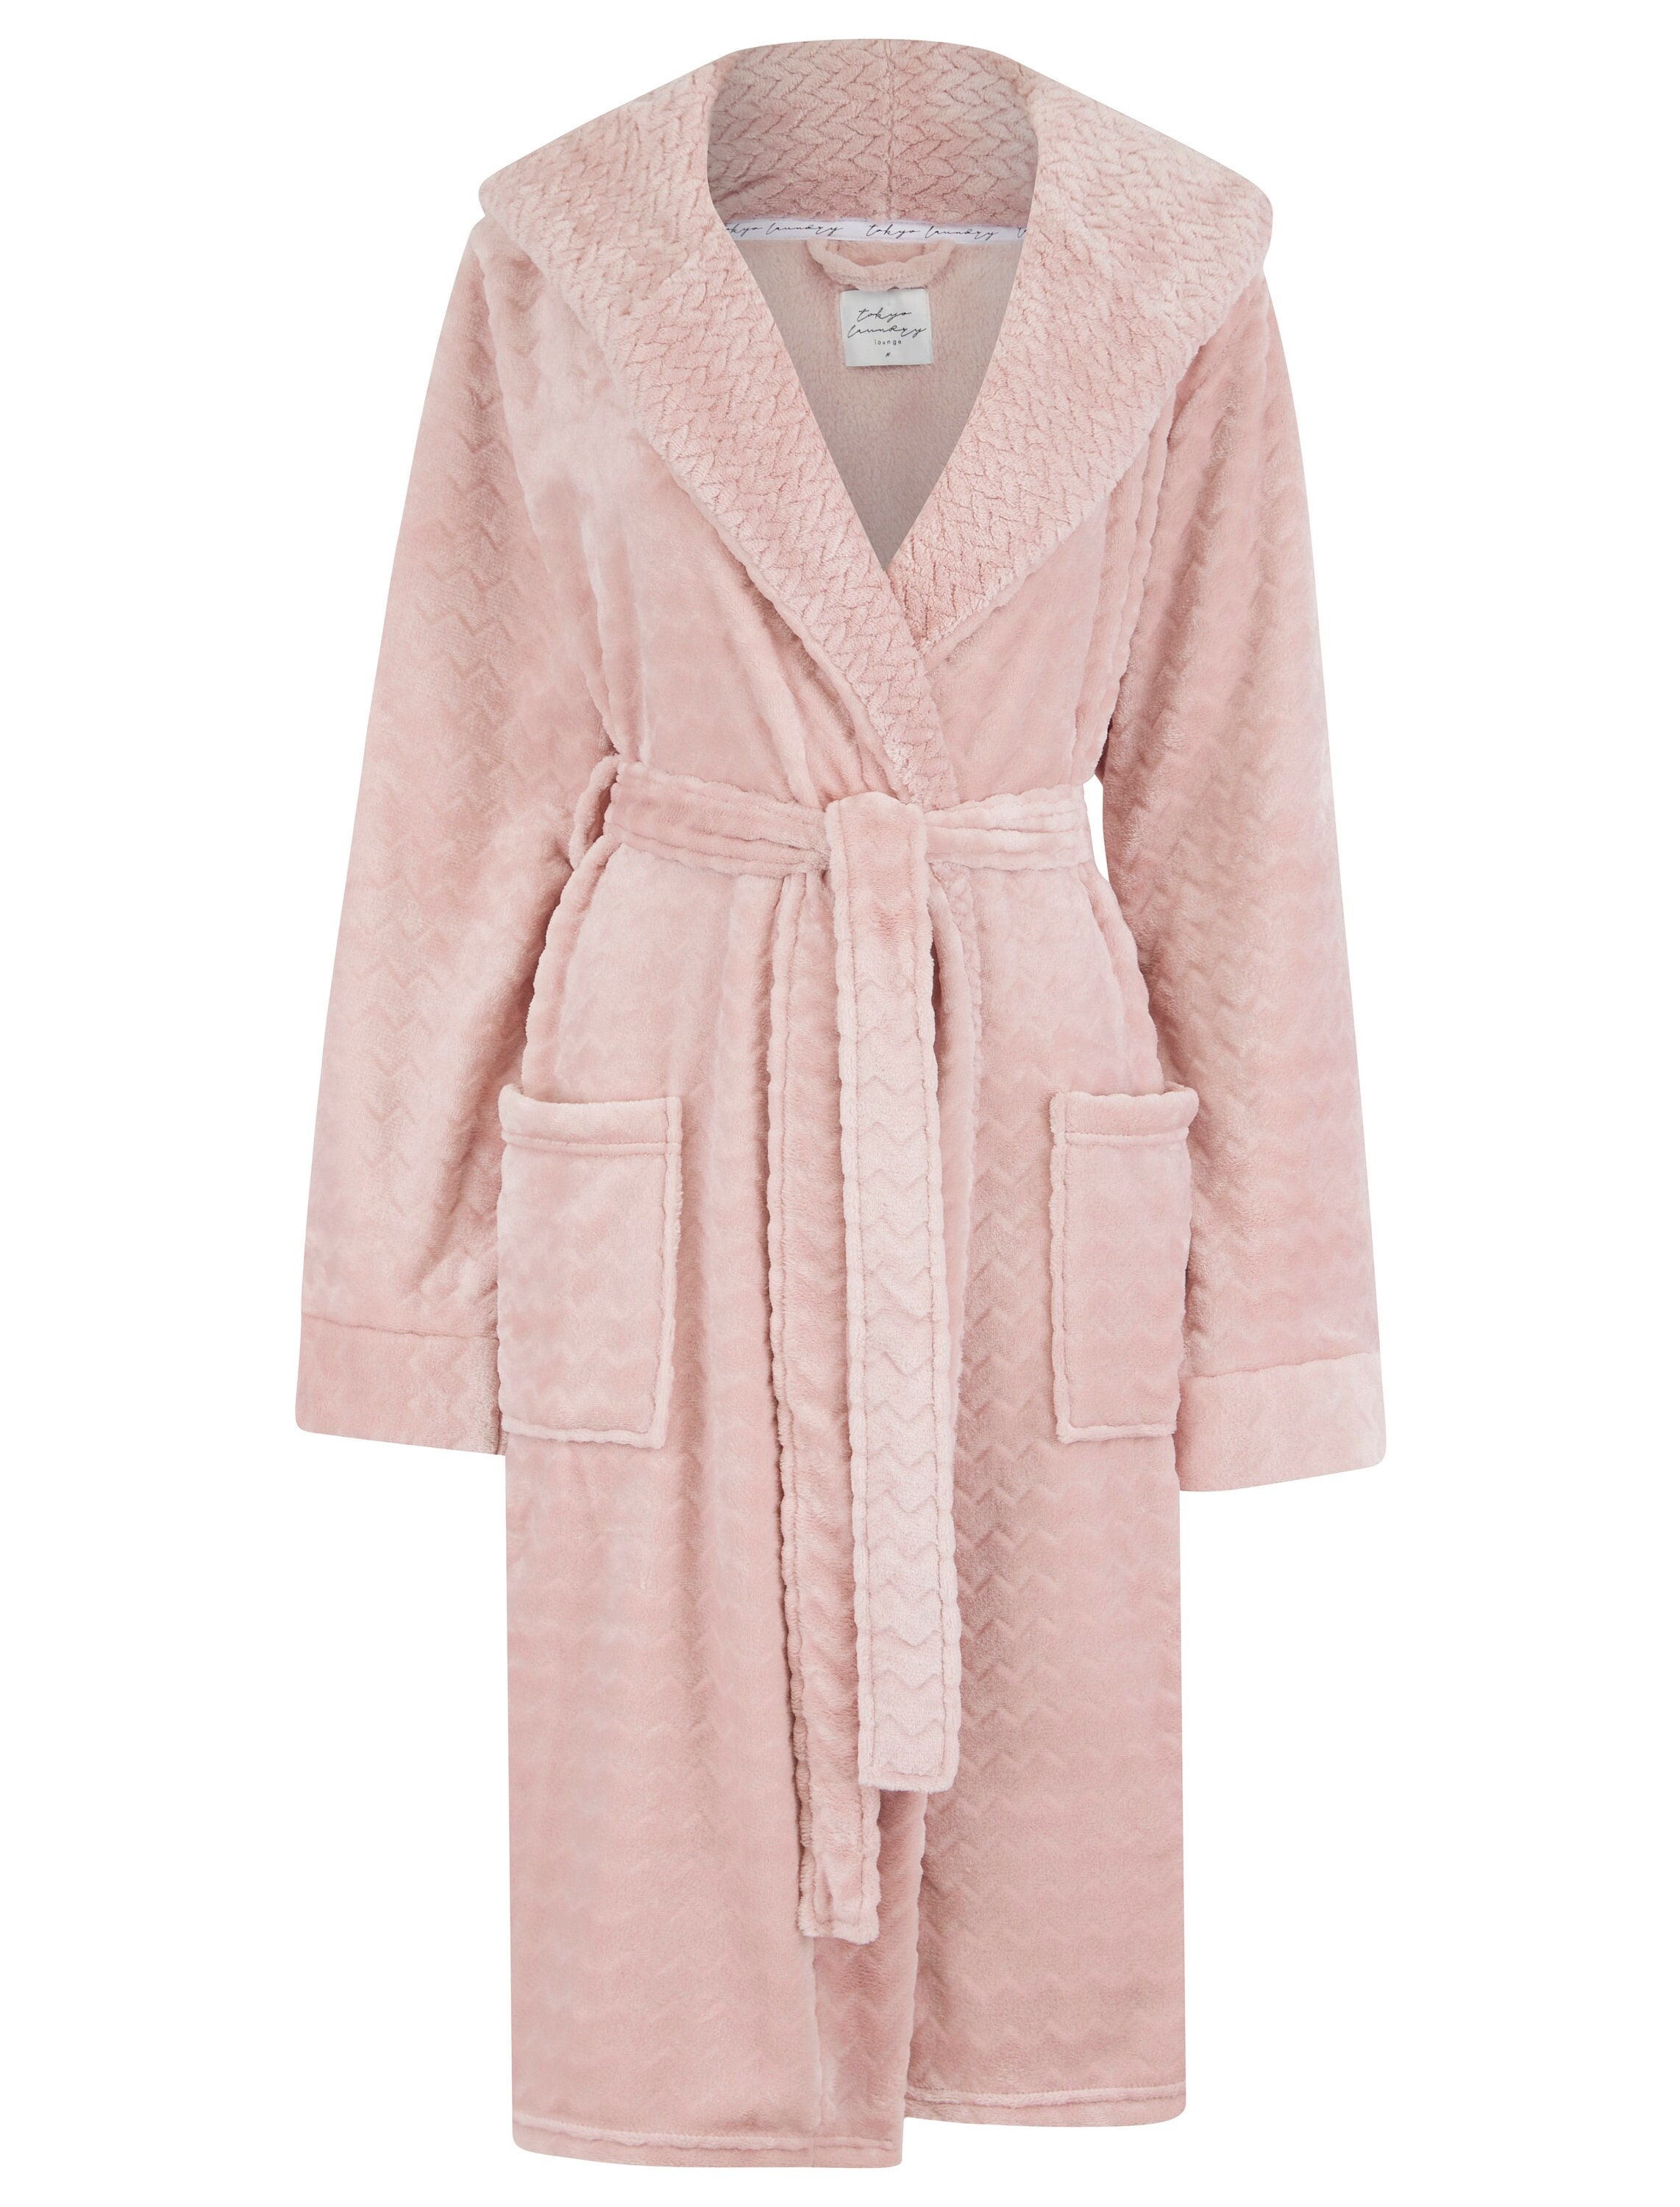 Women’s Ladies Soft Luxurious Fluffy Fleece Pink Dressing Gown Hooded Bath Robe